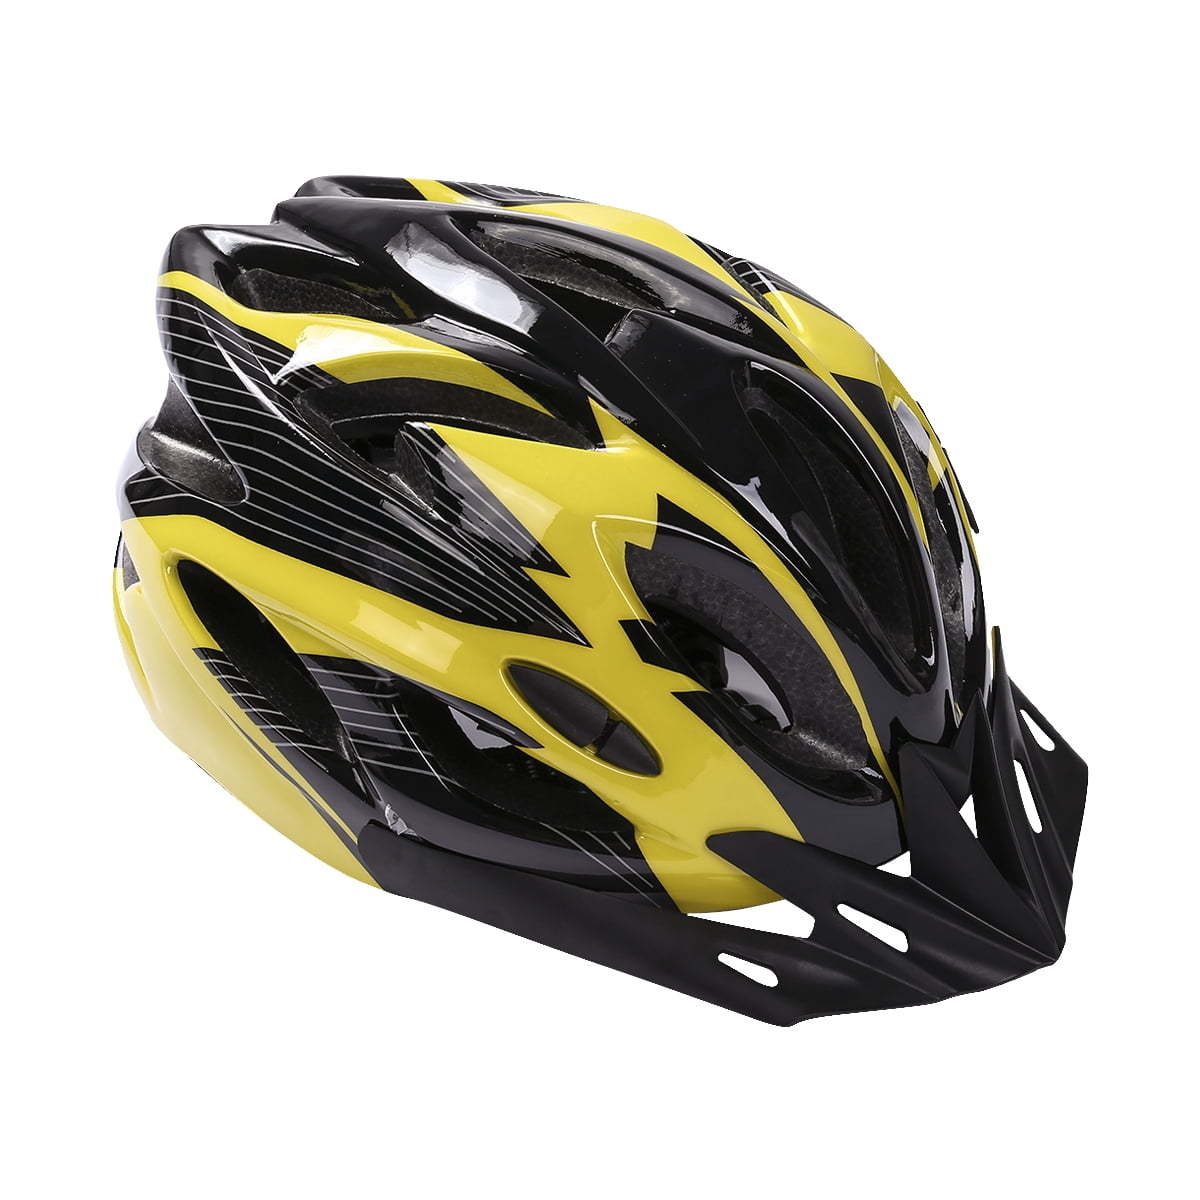 Mens Ladys Bike Helmet Cycling Adjustable Safety Helmet Outdoor Protective J1K3 